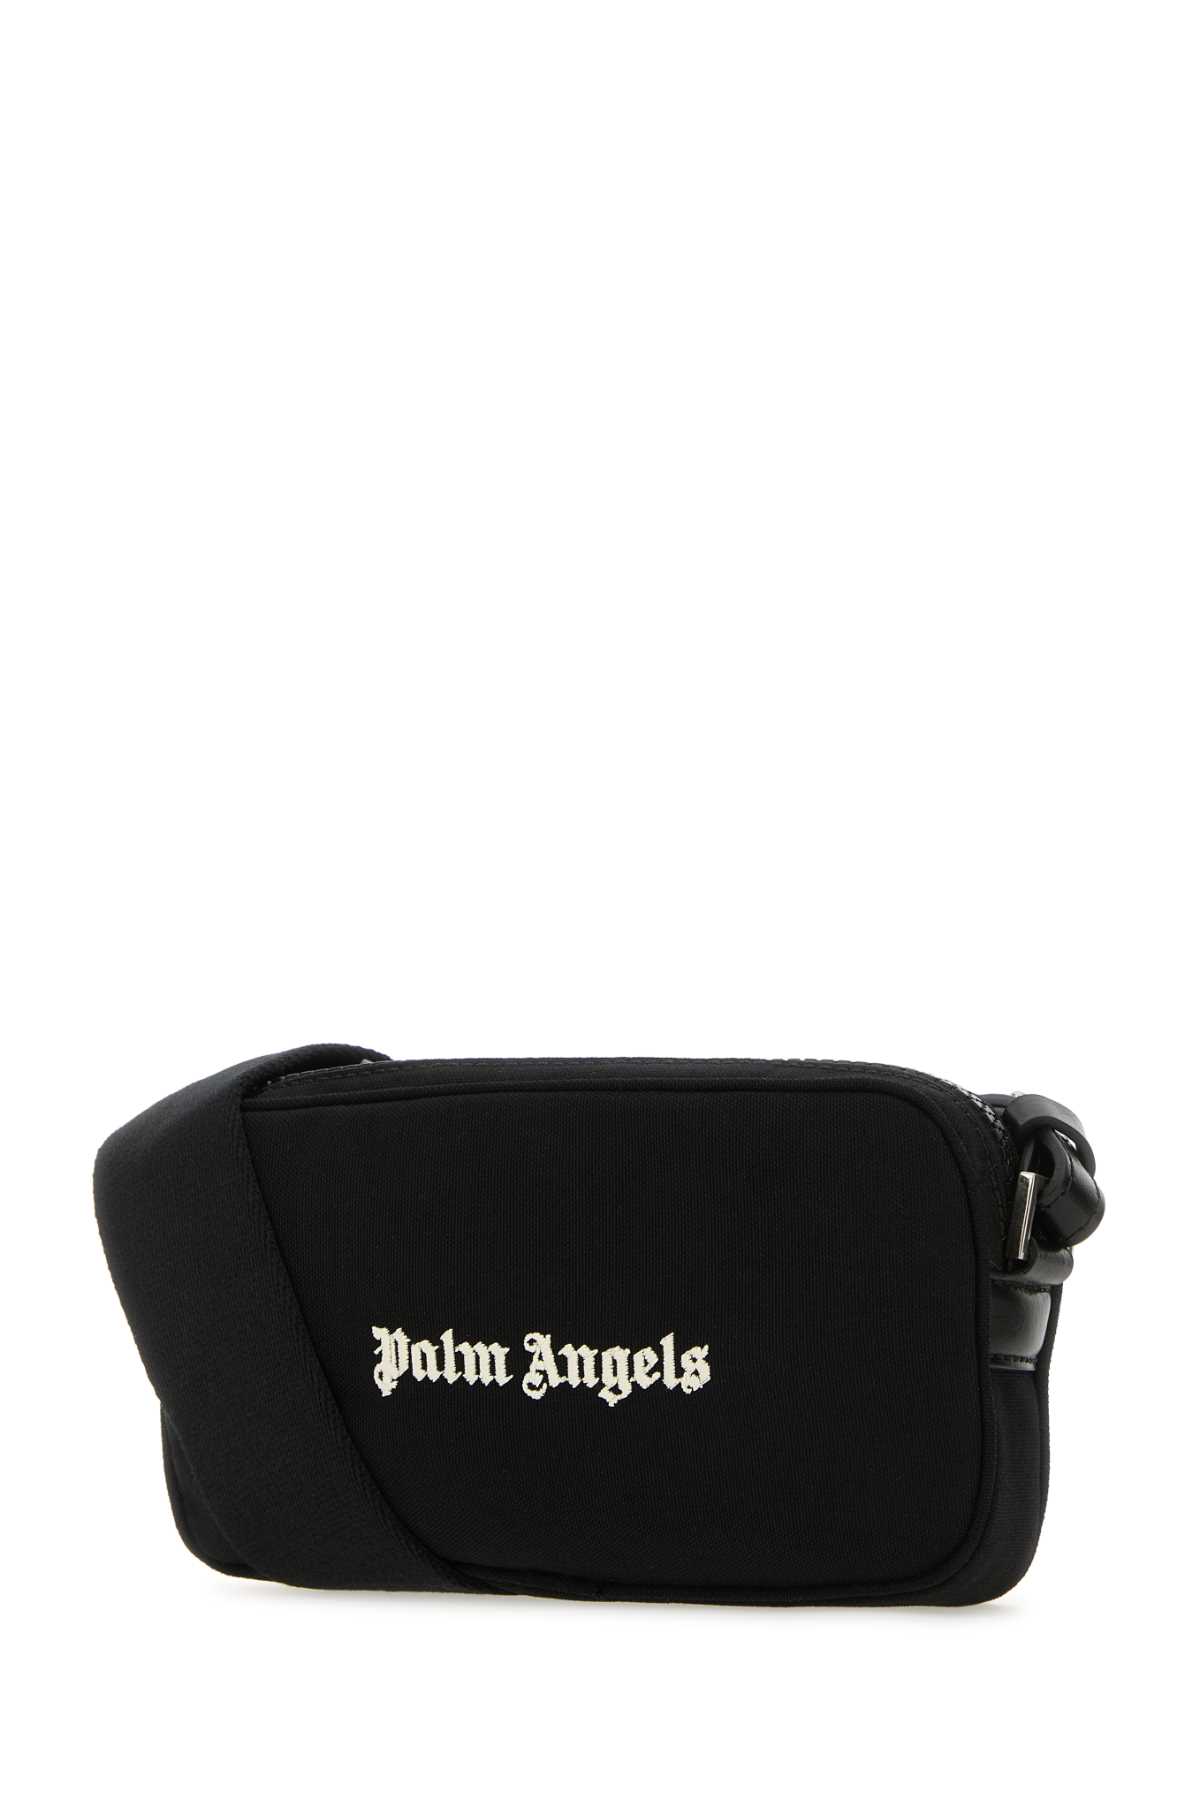 Palm Angels Man Black Canvas Crossbody Bag In Blackwhit